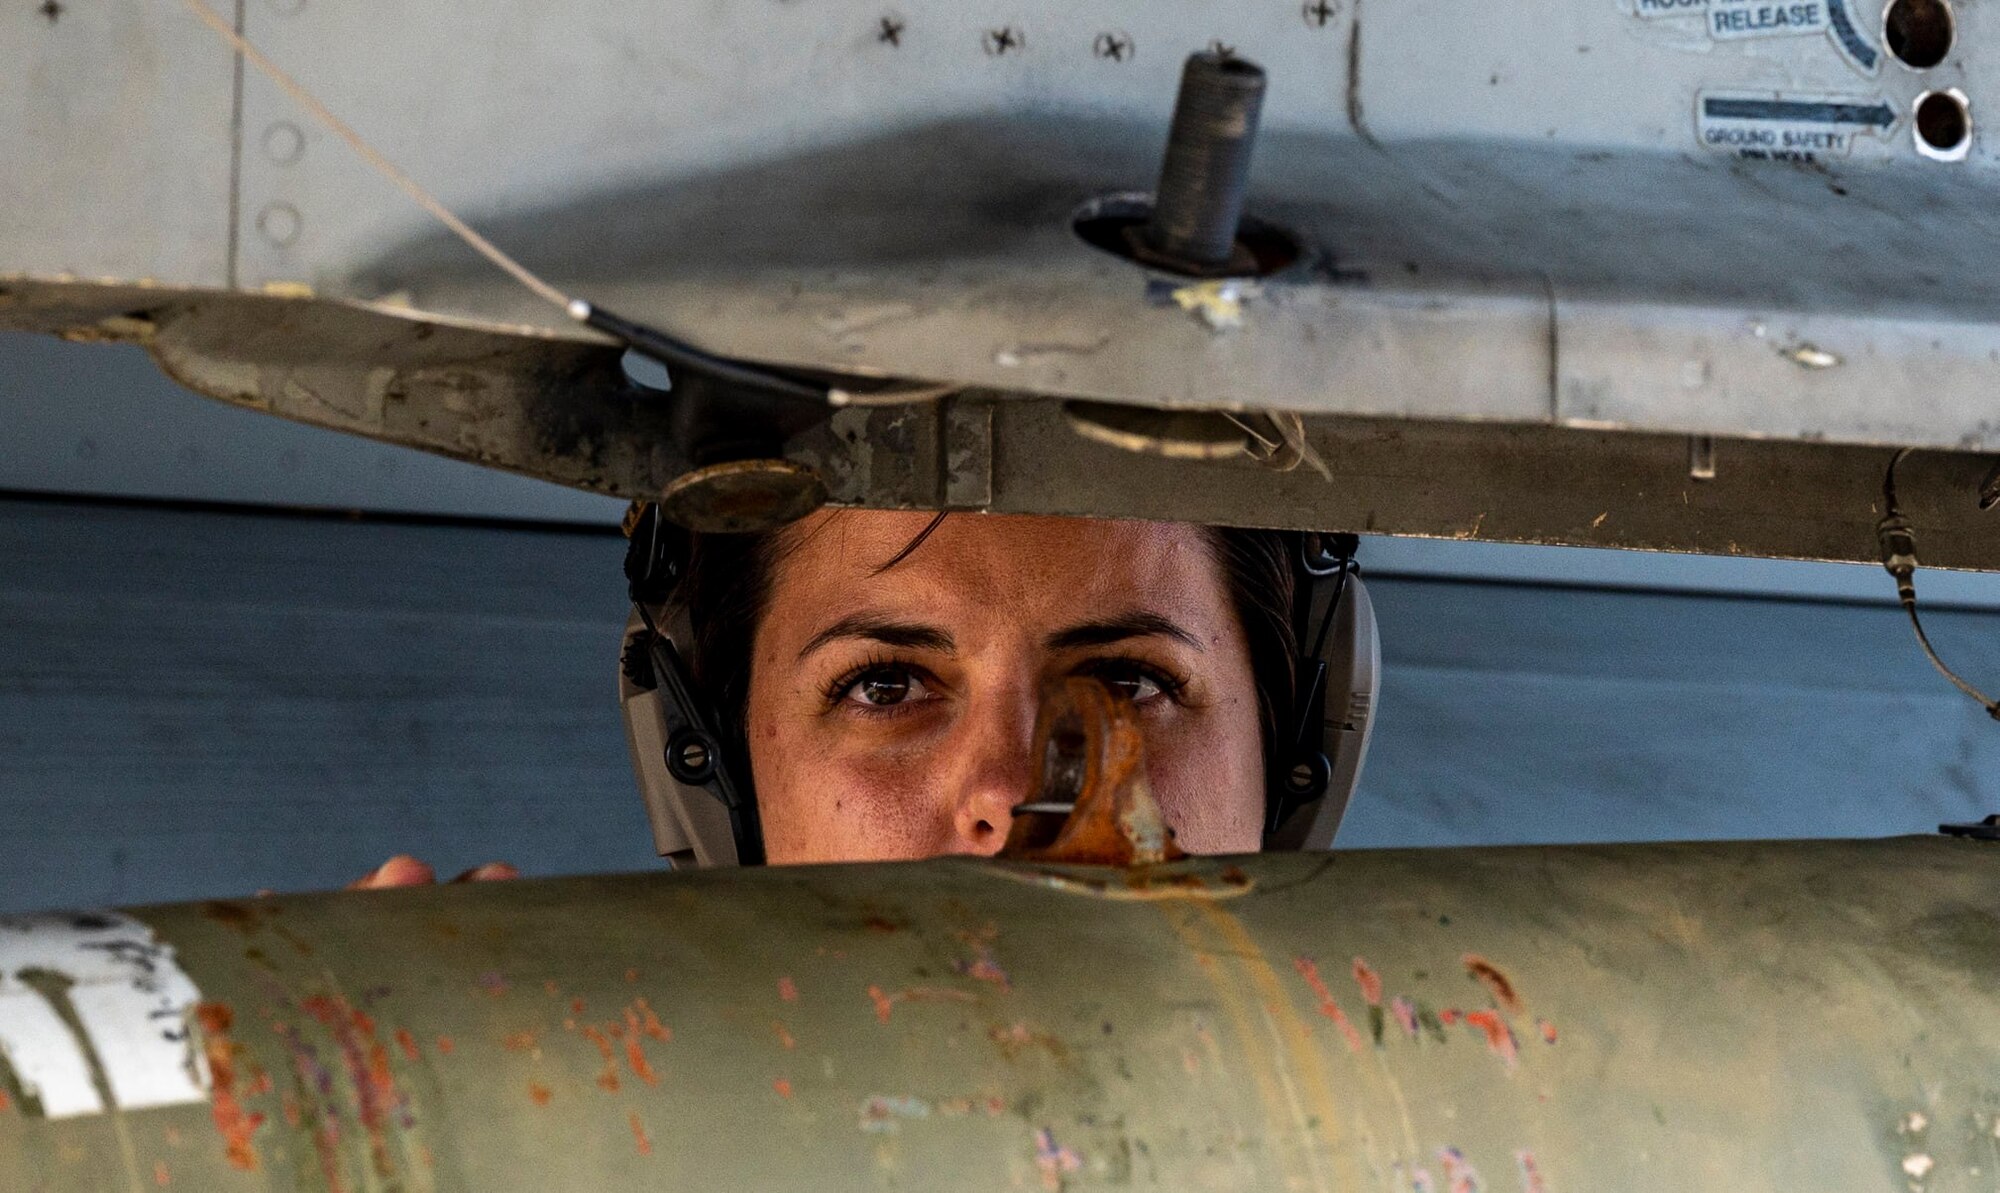 An Airman looks over a munition.